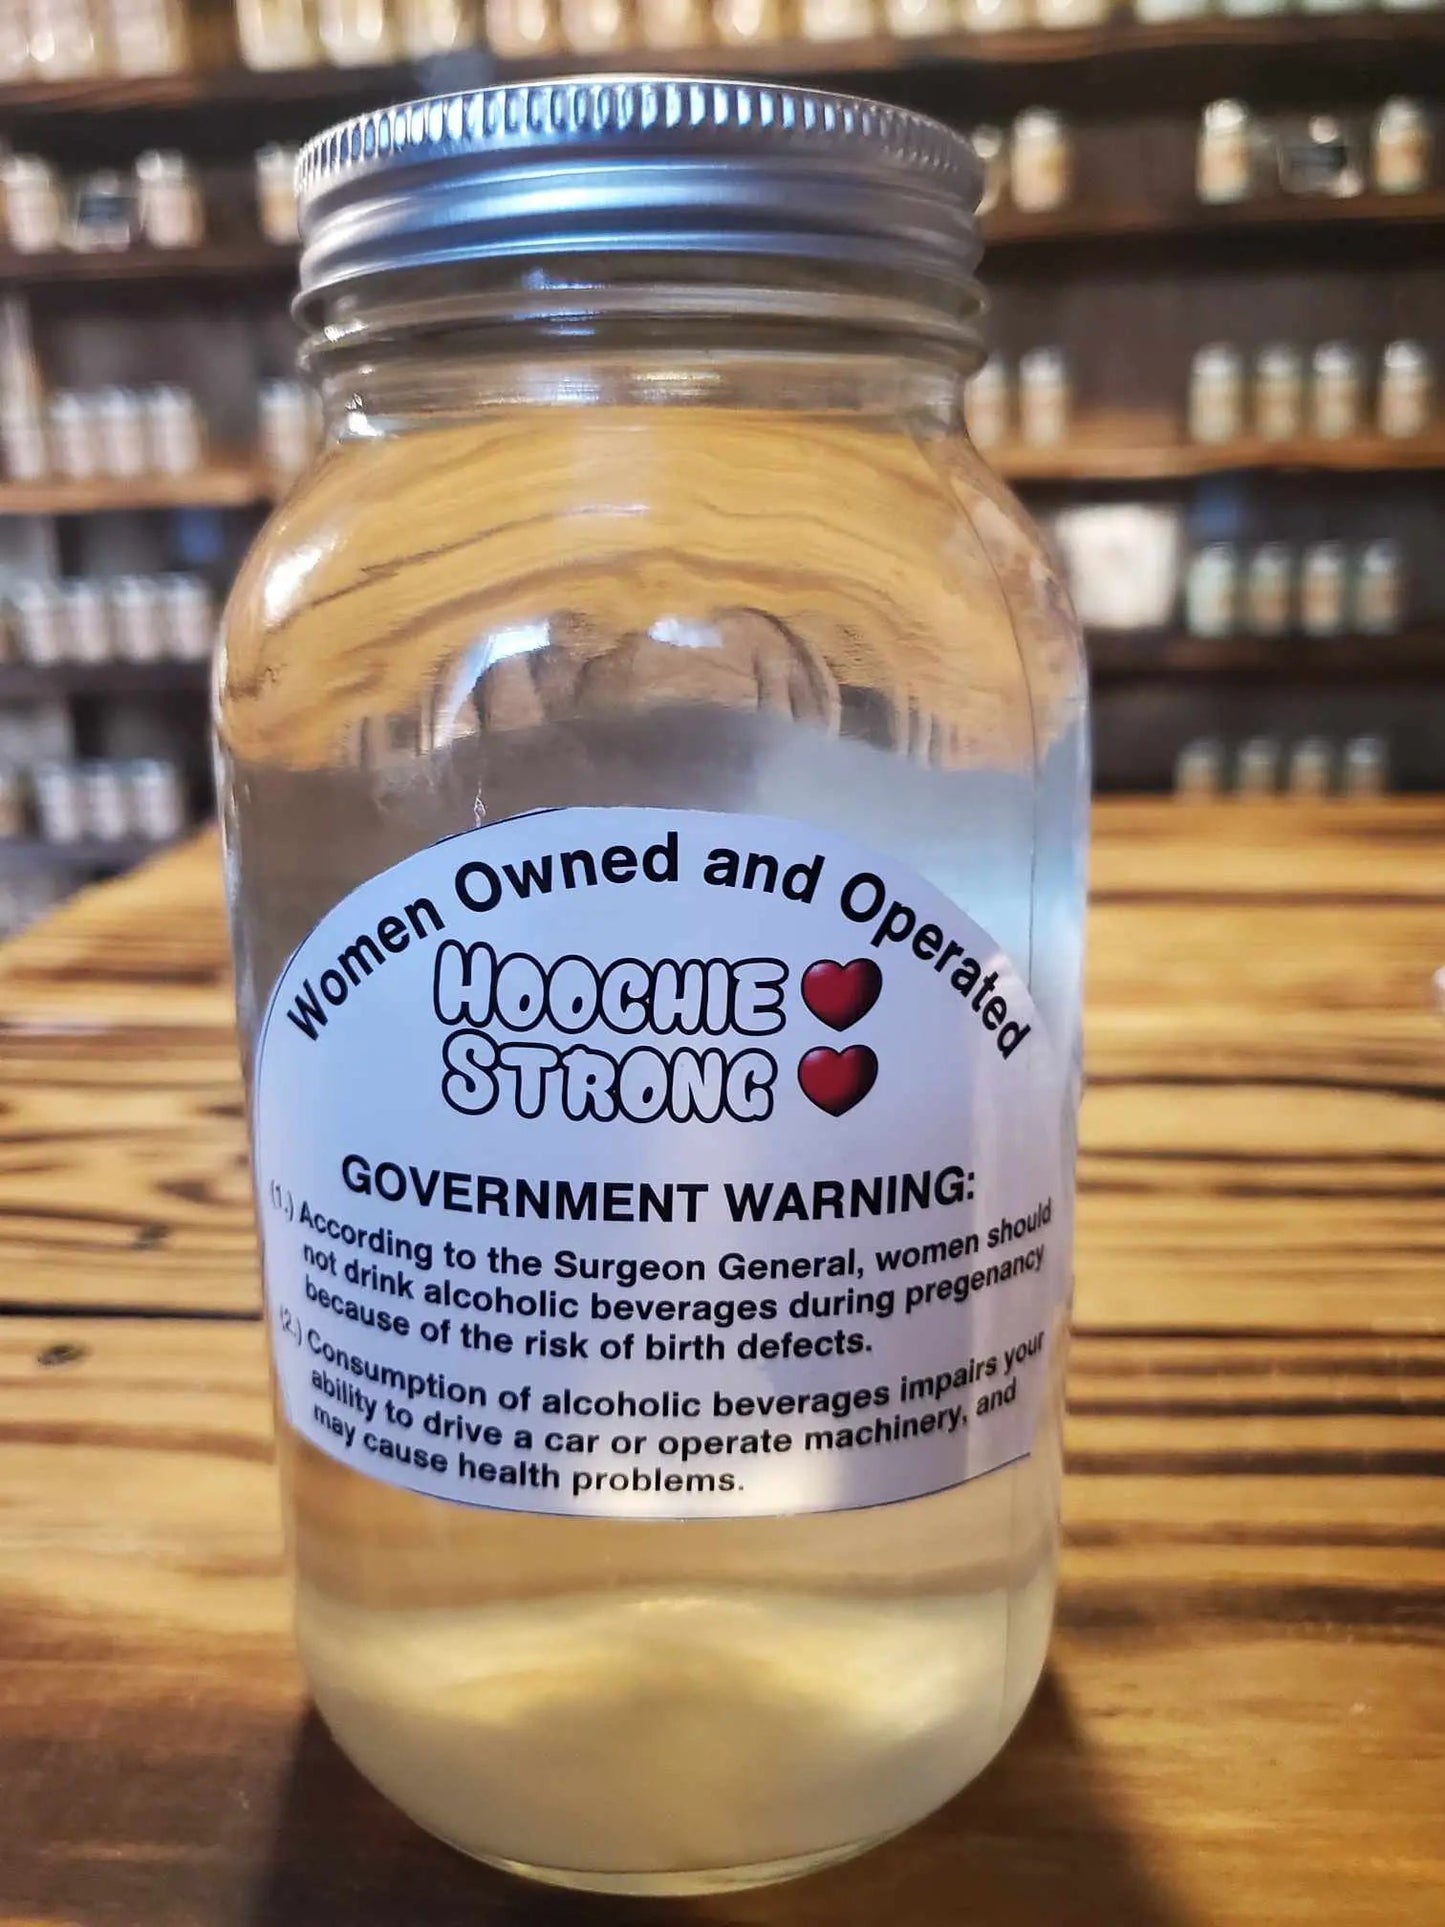 Butter Pecan Moonshine | Hoochie Hooch Distillery Hoochie Hooch Distillery